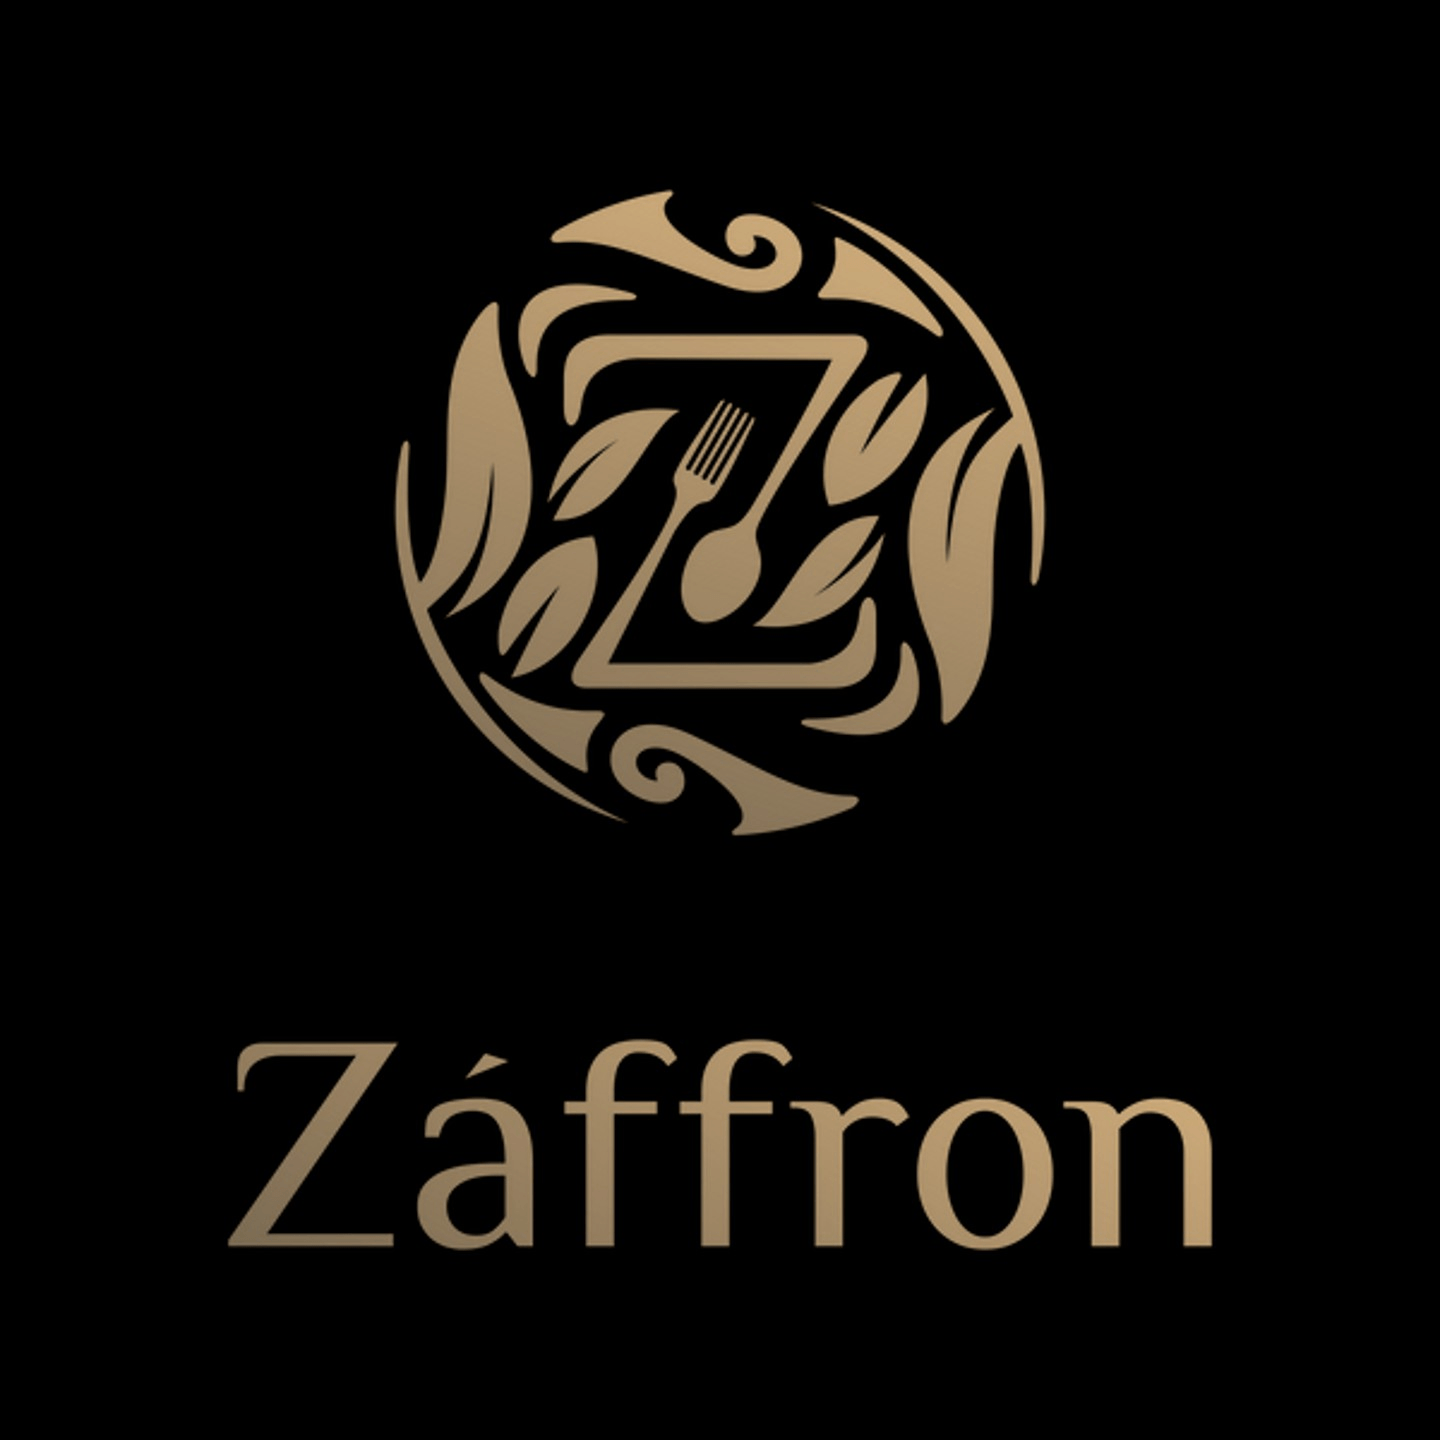 Welcome to Zaffron!